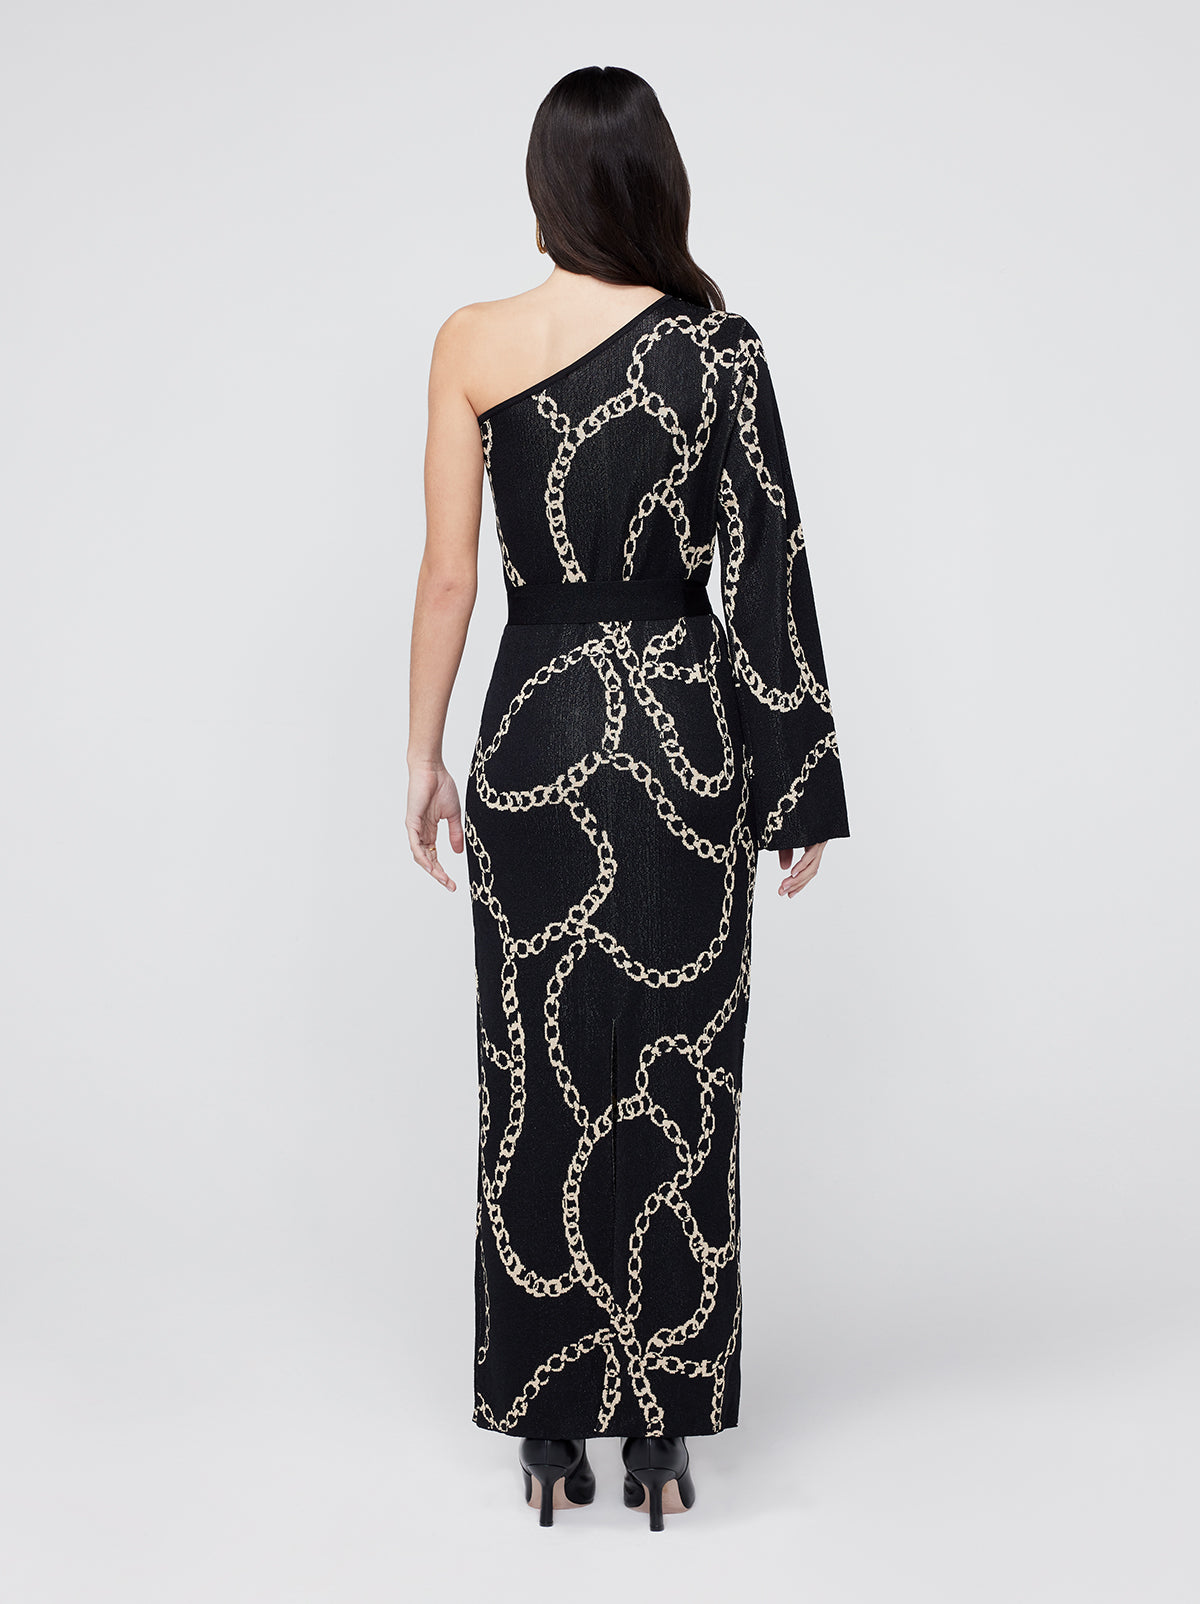 Esme Black Chain Lurex Knit One Shoulder Dress